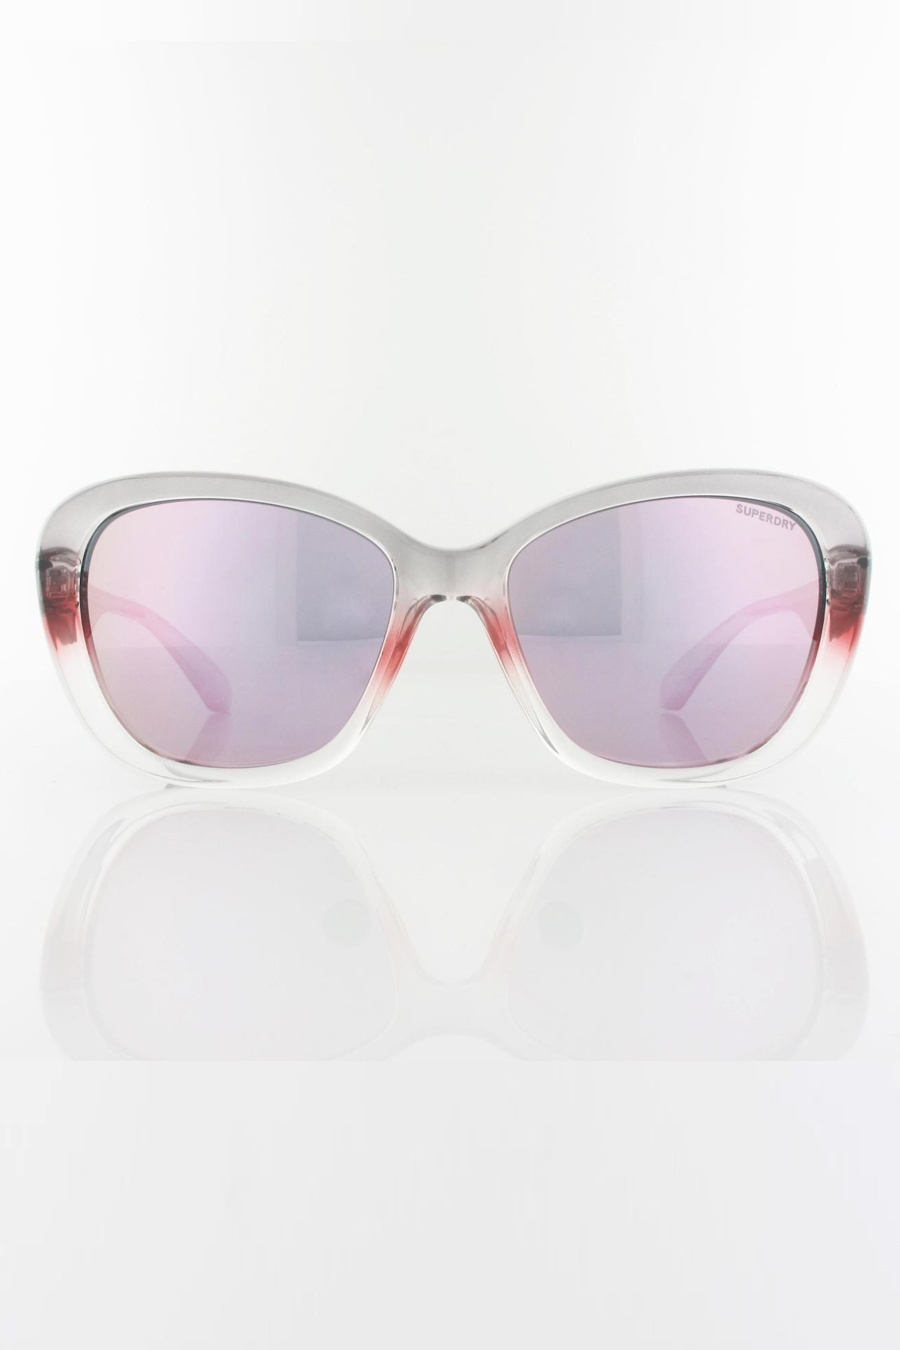 Sunglasses SUPERDRY SDS-5022-108